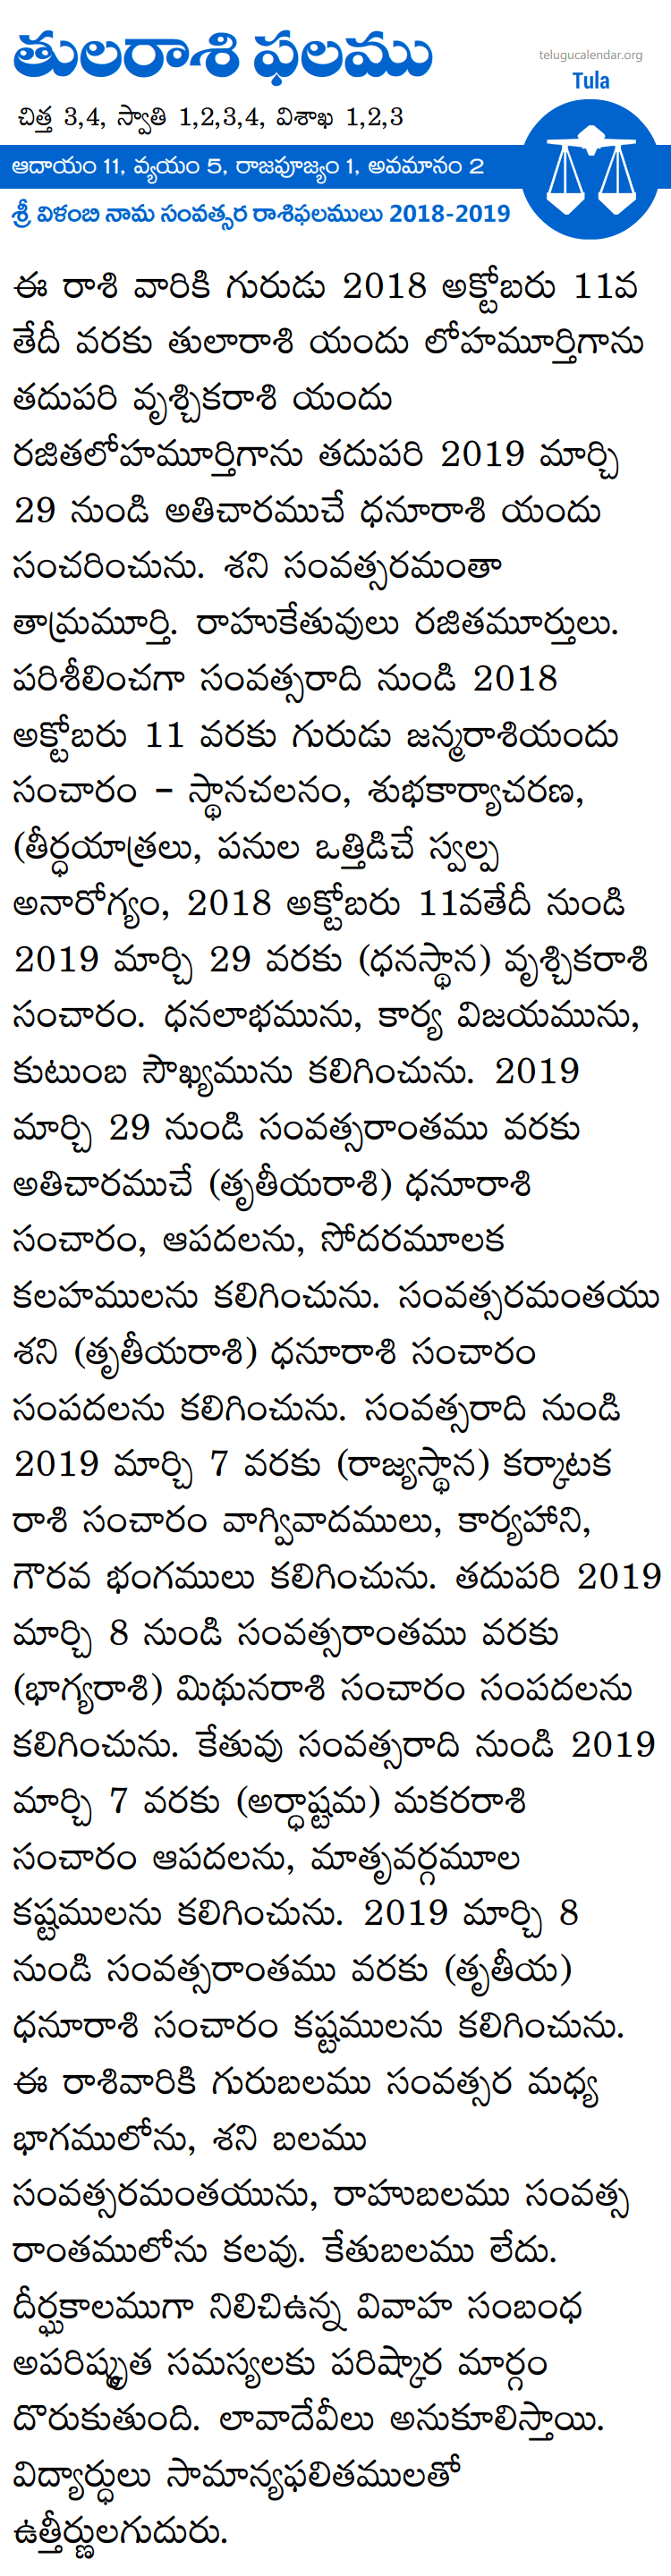 Tula Rasi Phalalu 2018-2019 Telugu